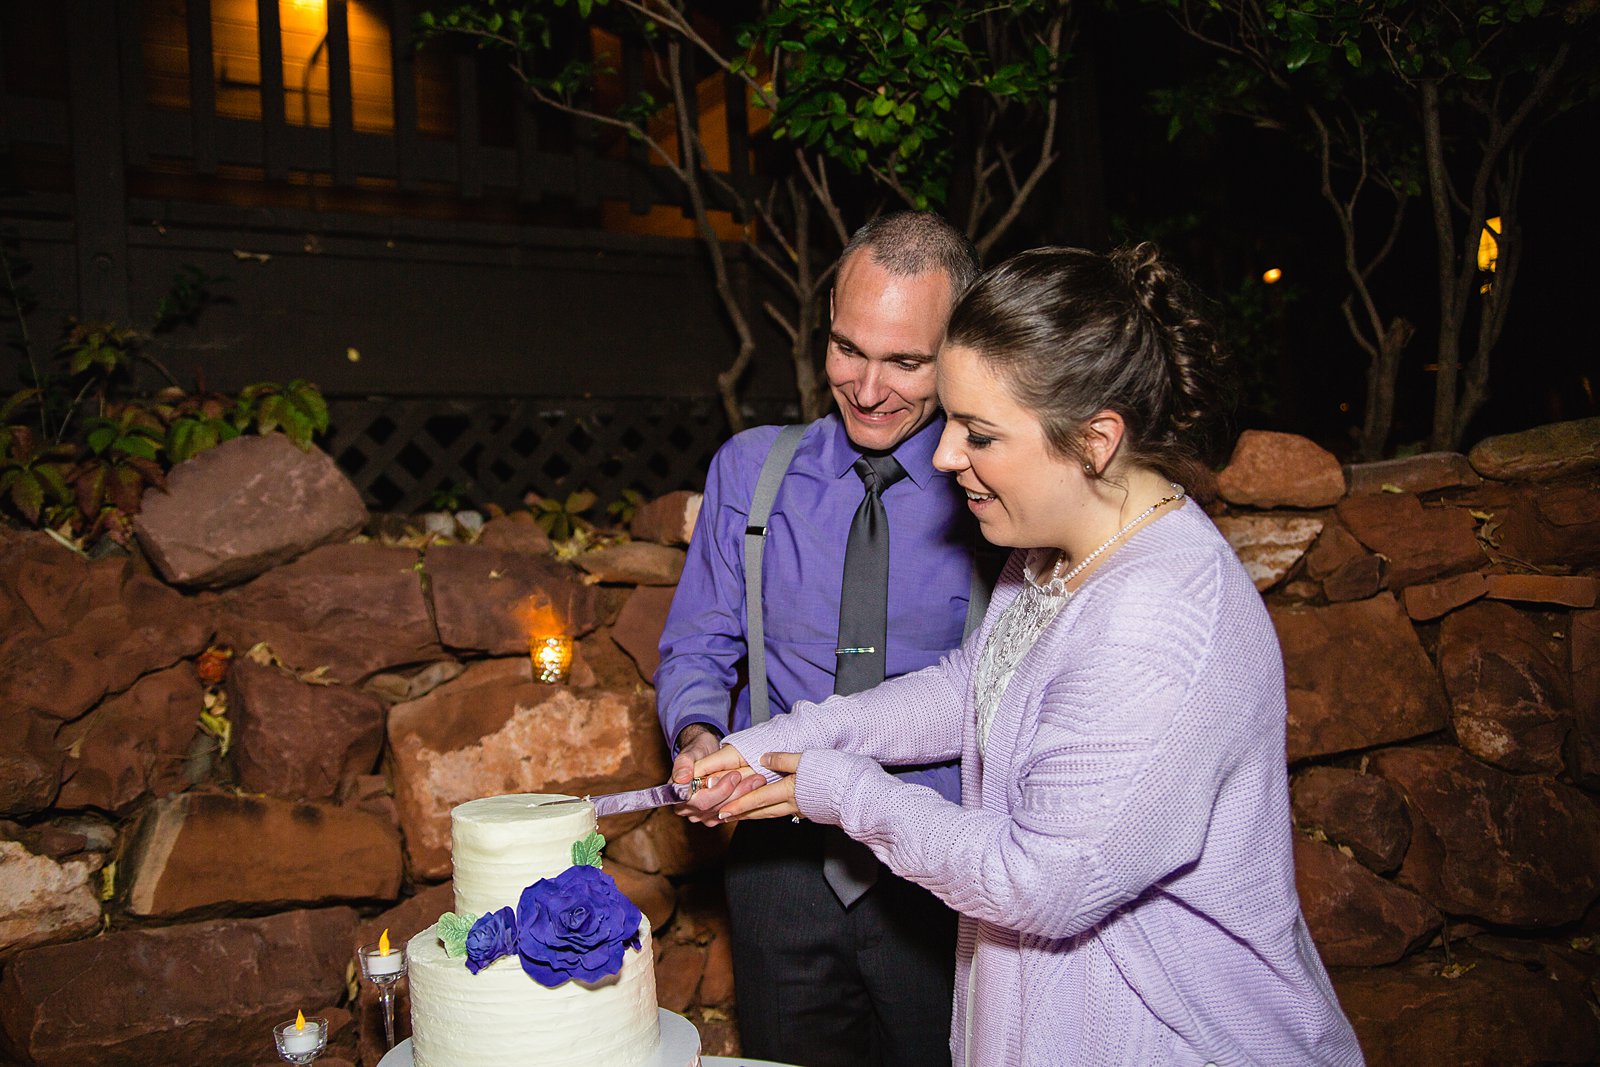 Bride and groom cutting their wedding cake at their L'Auberge de Sedona wedding reception by Arizona wedding photographer PMA Photography.